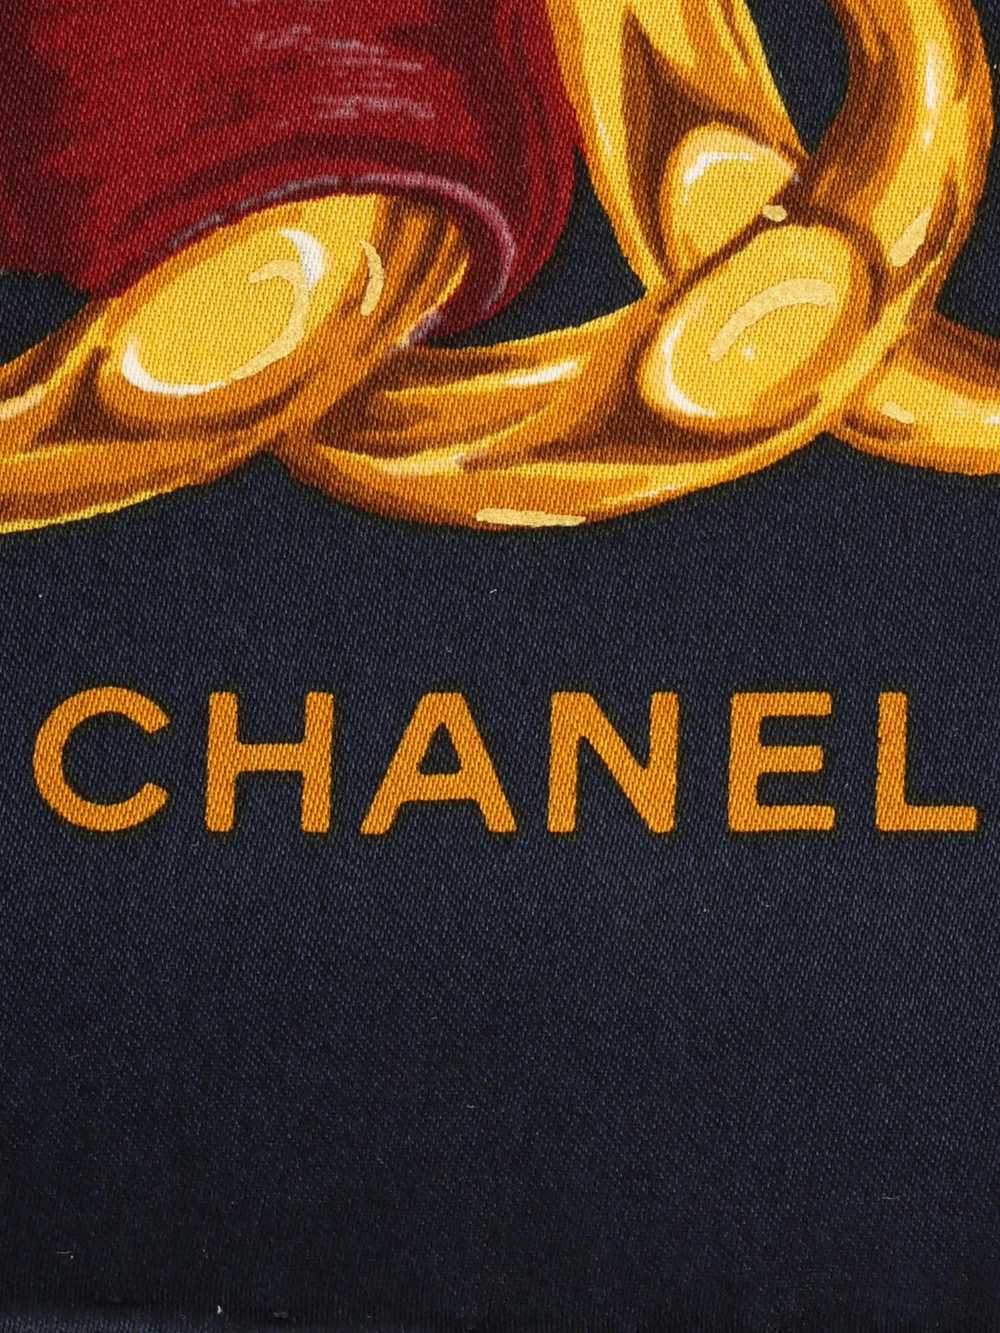 Chanel CHANEL Cc Mark Chain Print Scarf Navy - image 2